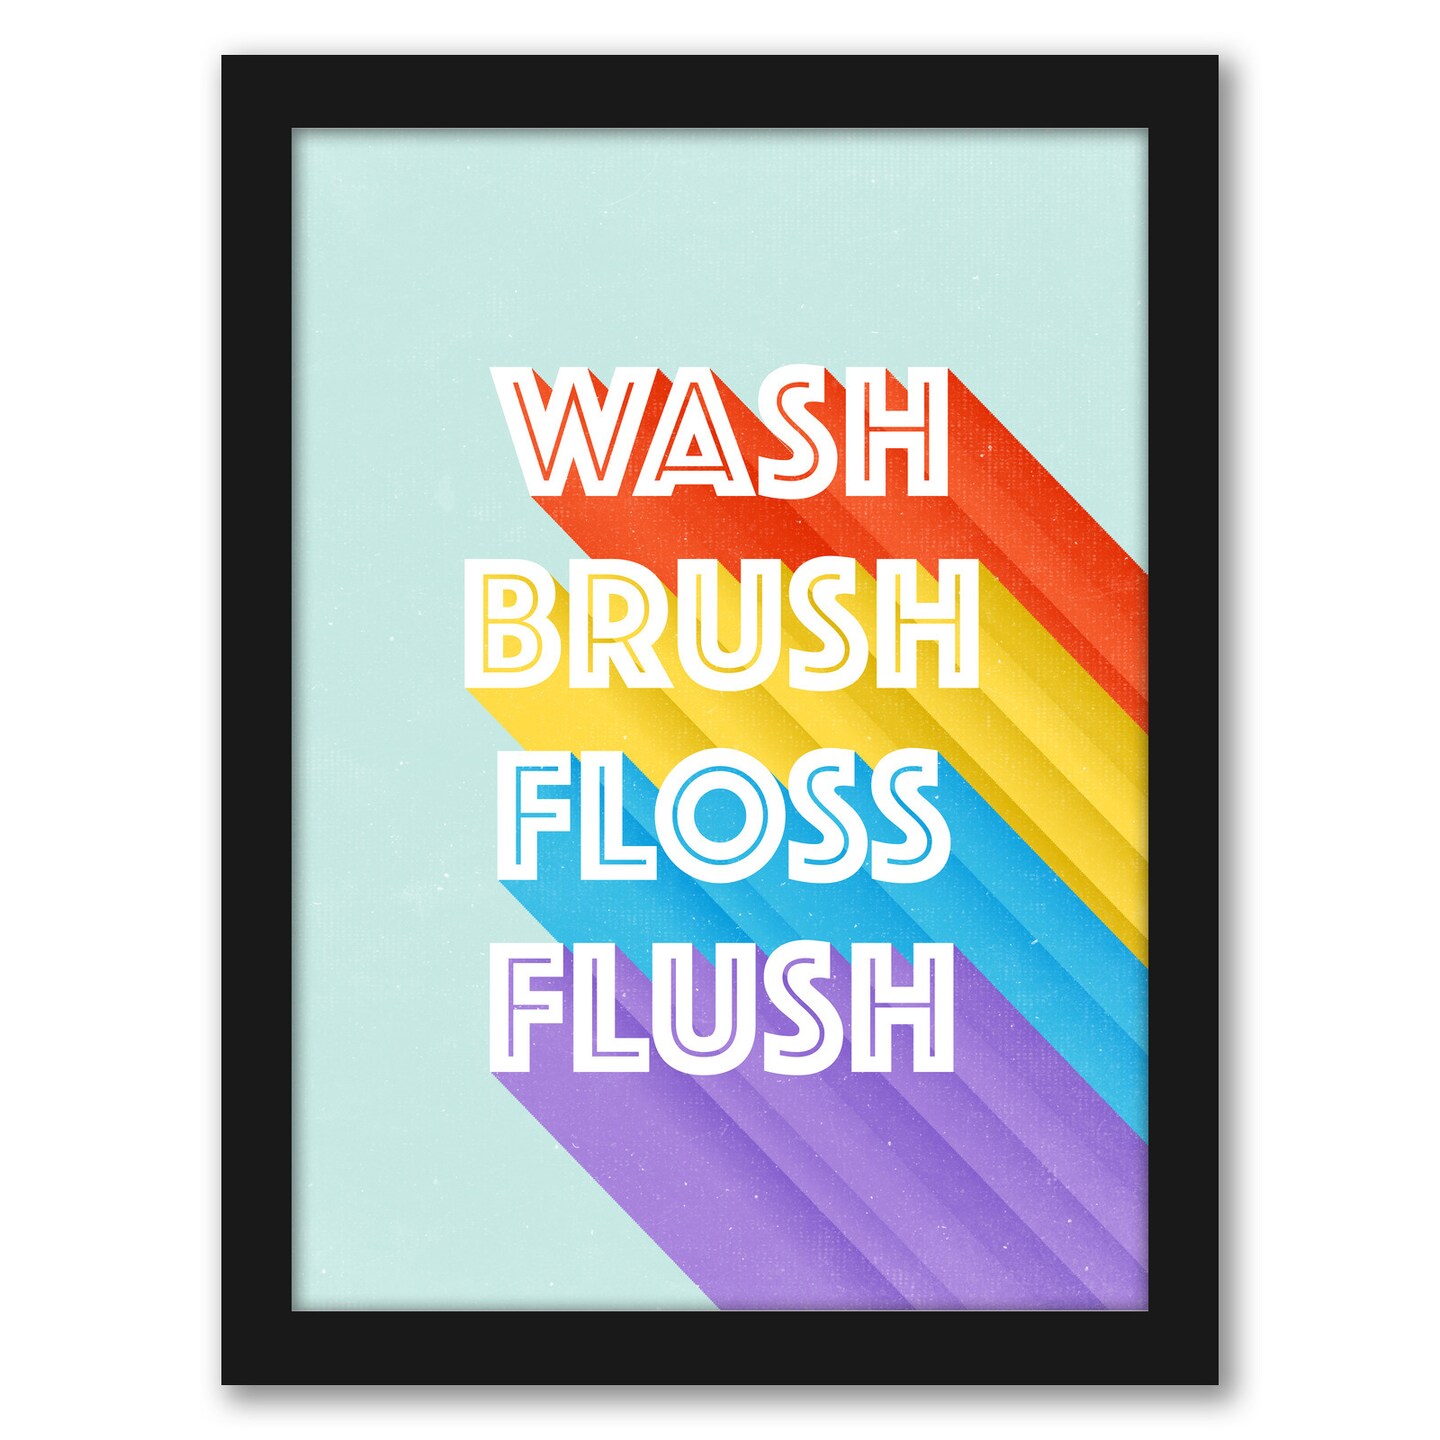 Wash Brush Floss Flush by Elena David Frame  - Americanflat